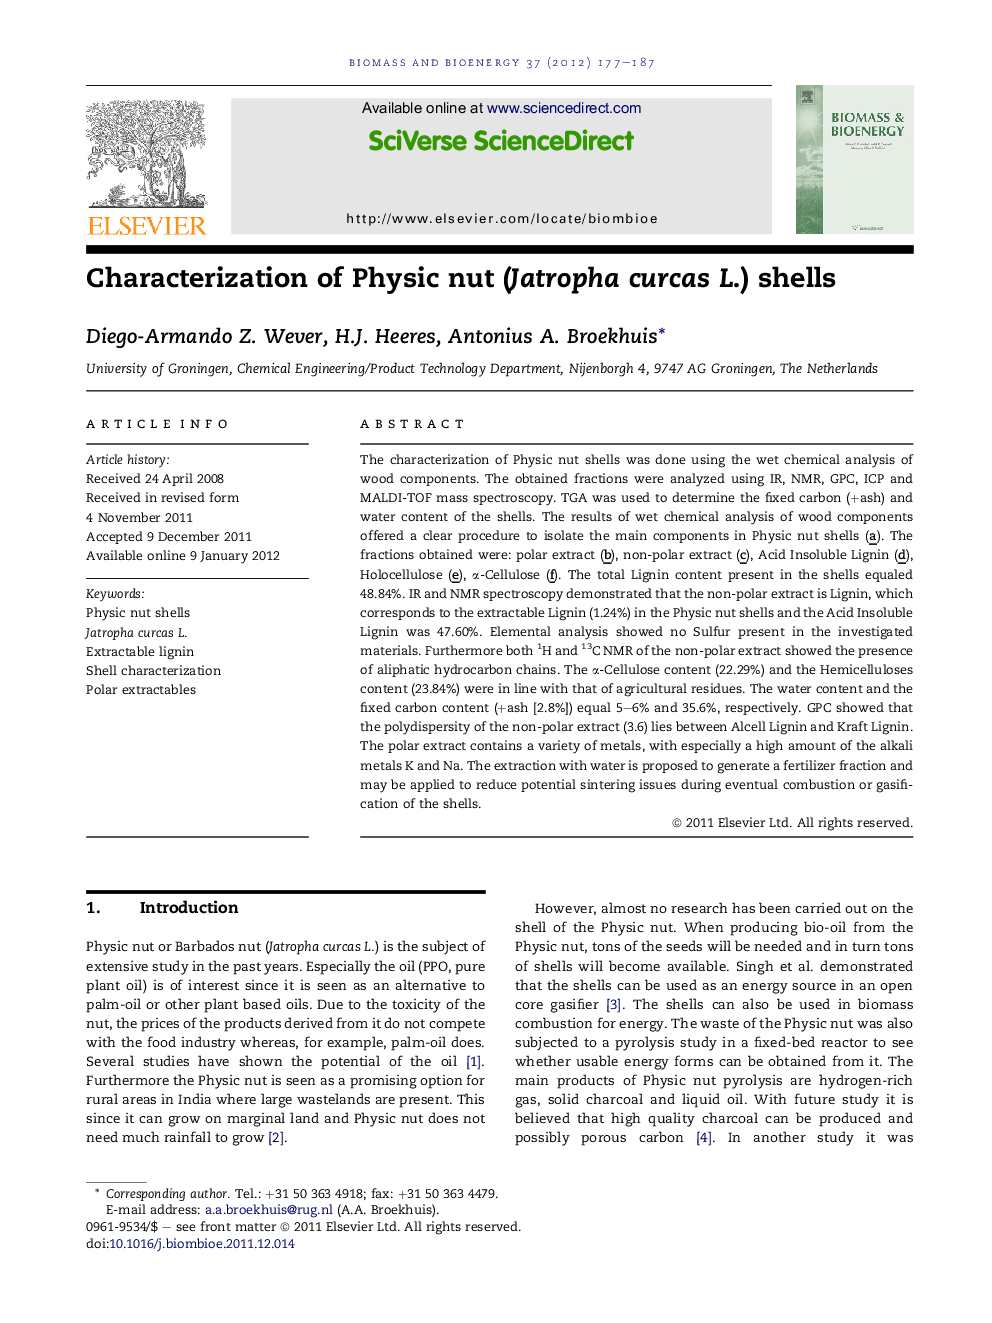 Characterization of Physic nut (Jatropha curcas L.) shells